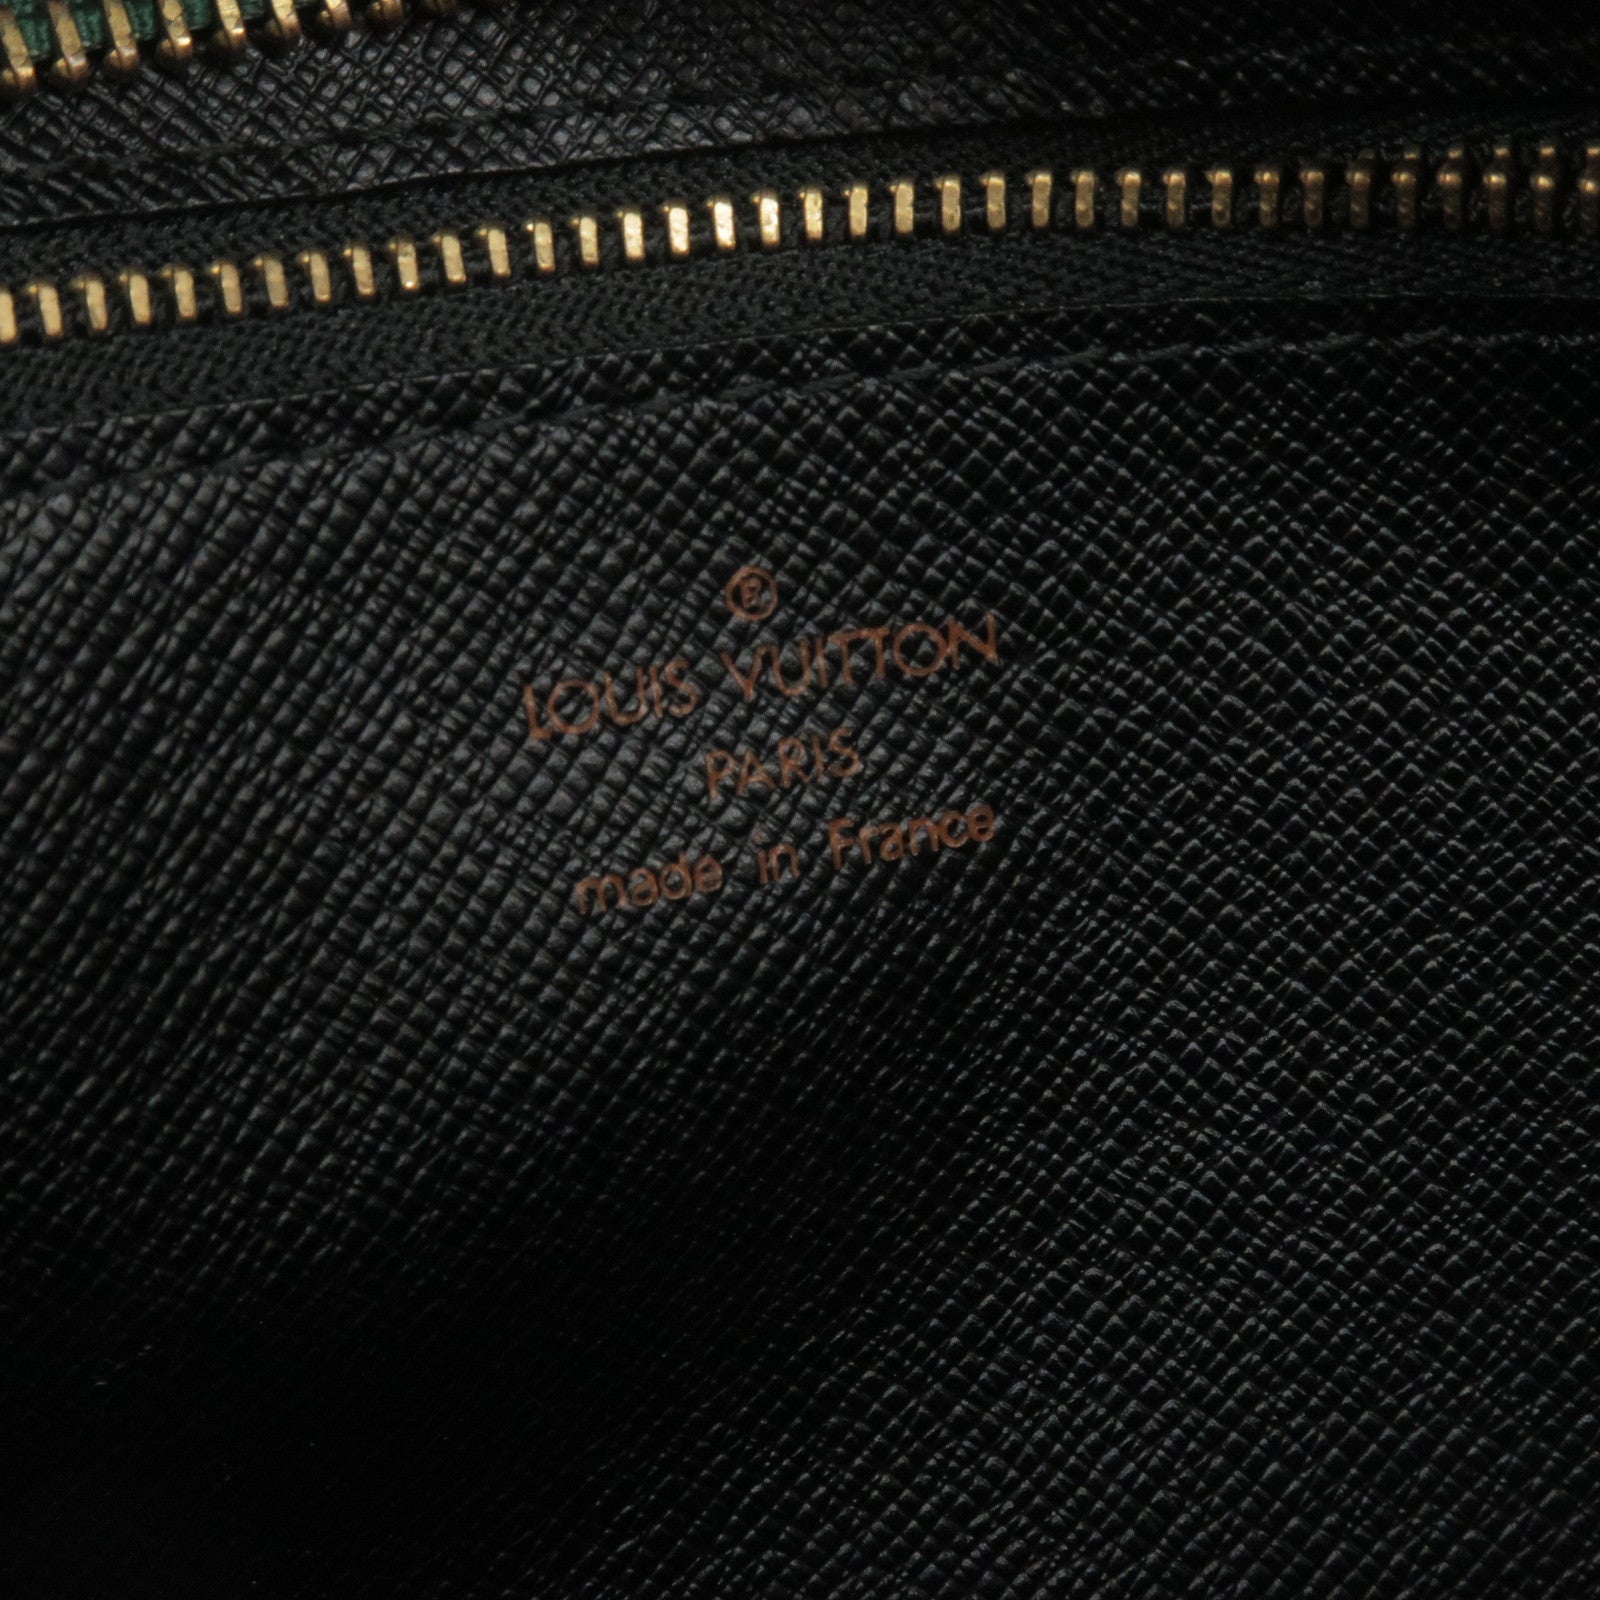 Louis Vuitton Green Epi Leather Trocadero Crossbody Bag